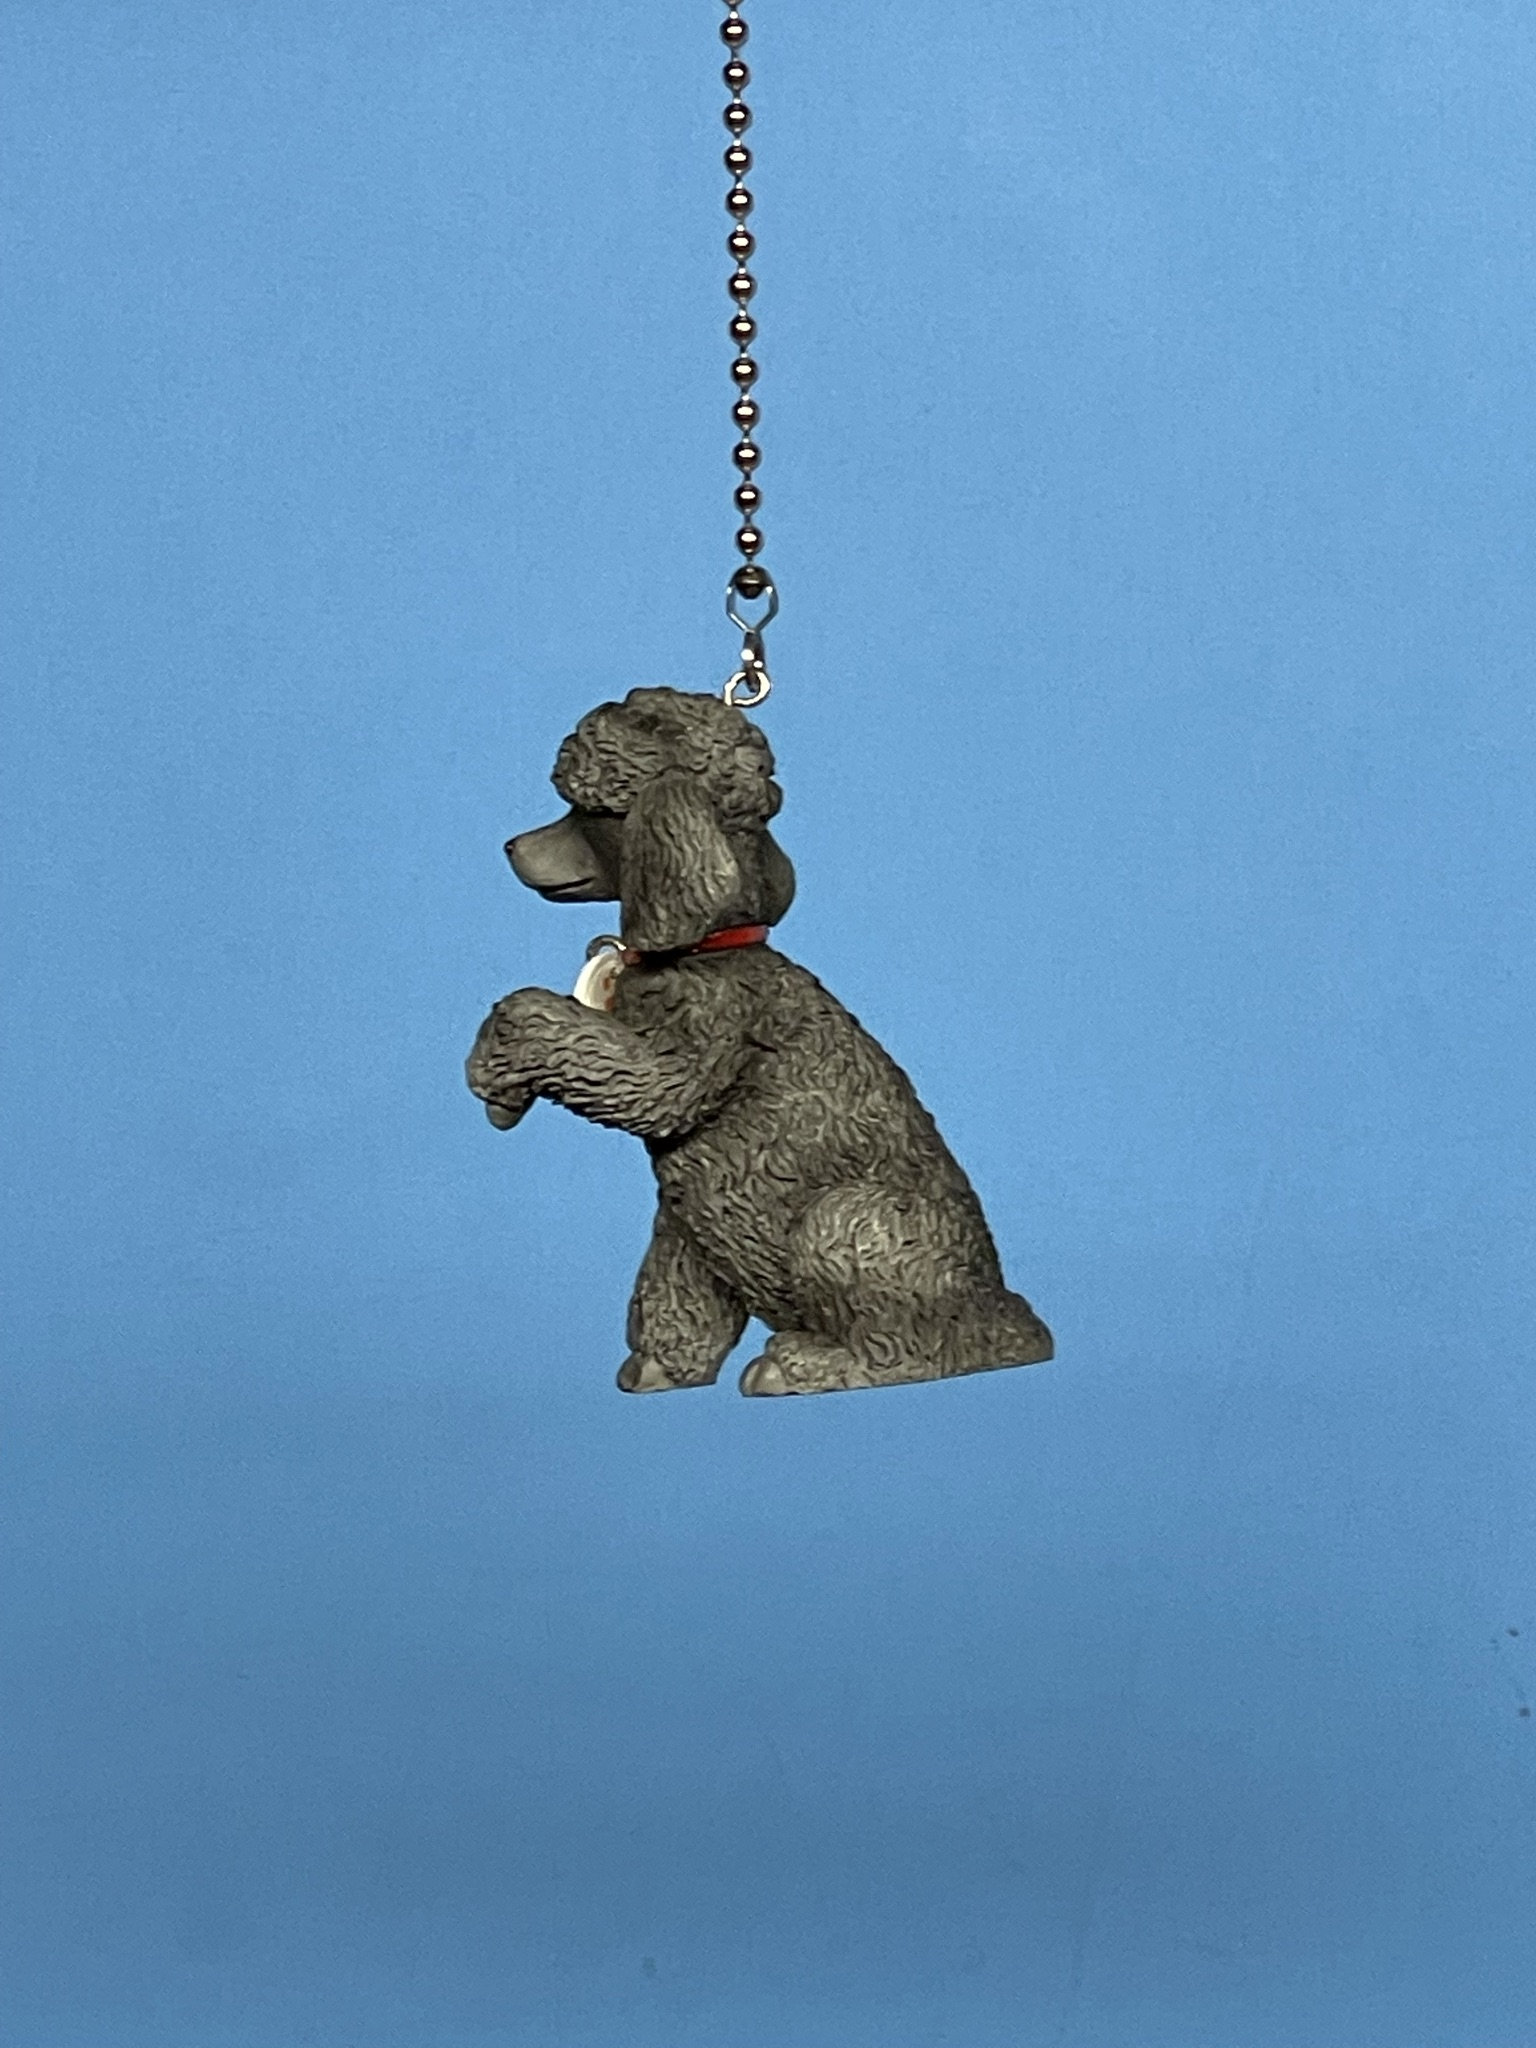 Black Poodle Ceiling Fan/Light Pull Chain | Etsy